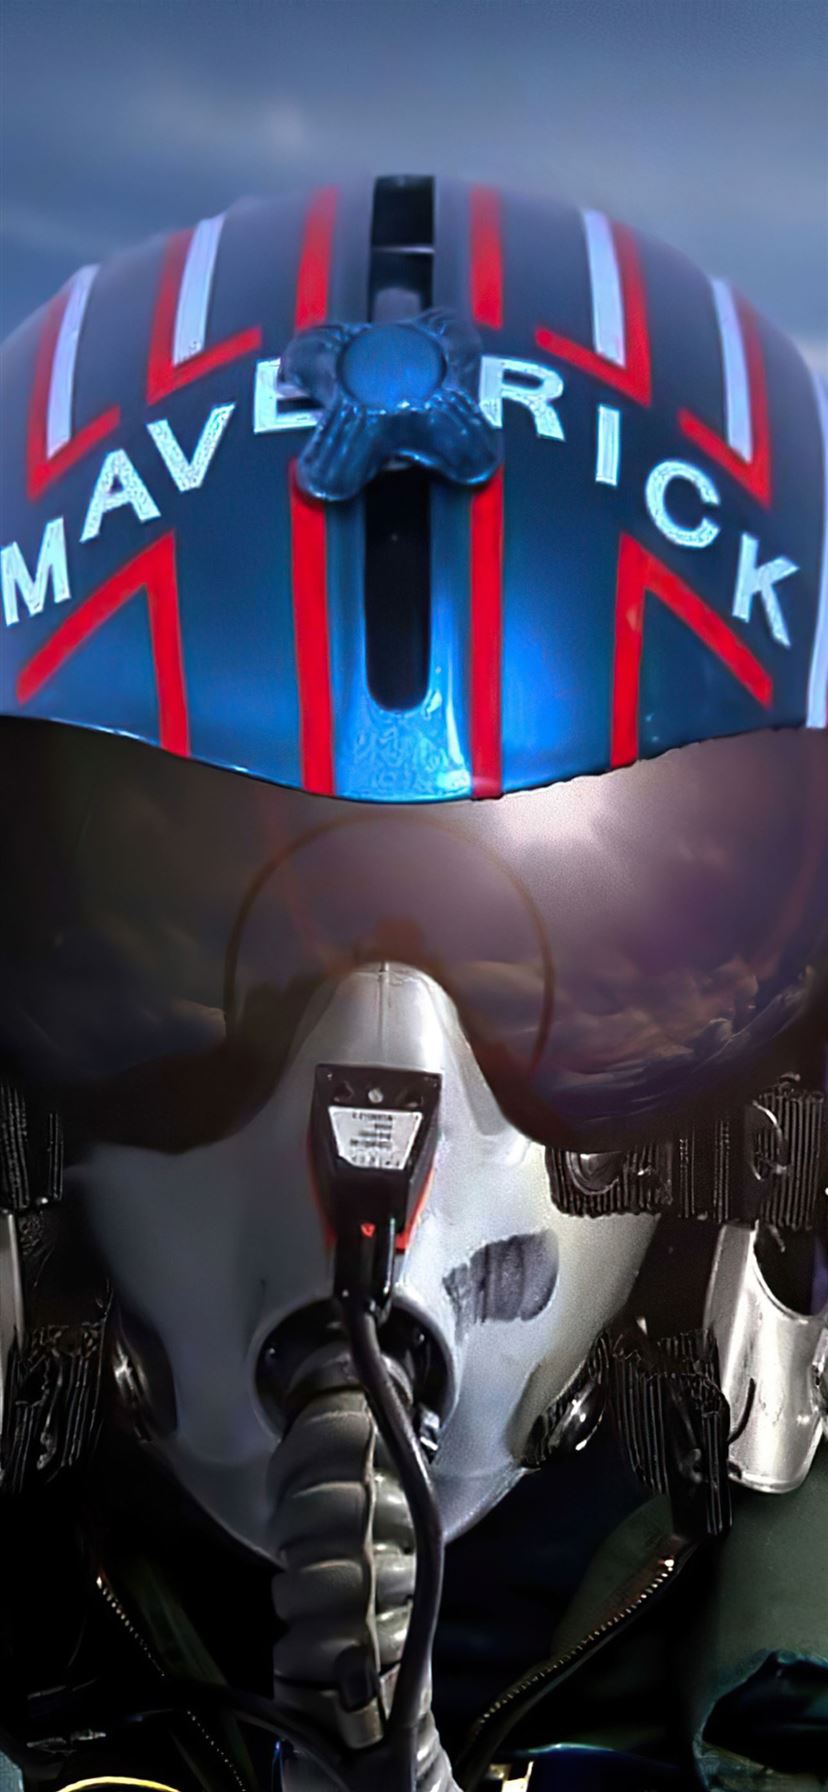 Top Gun: Maverick download the new version for iphone